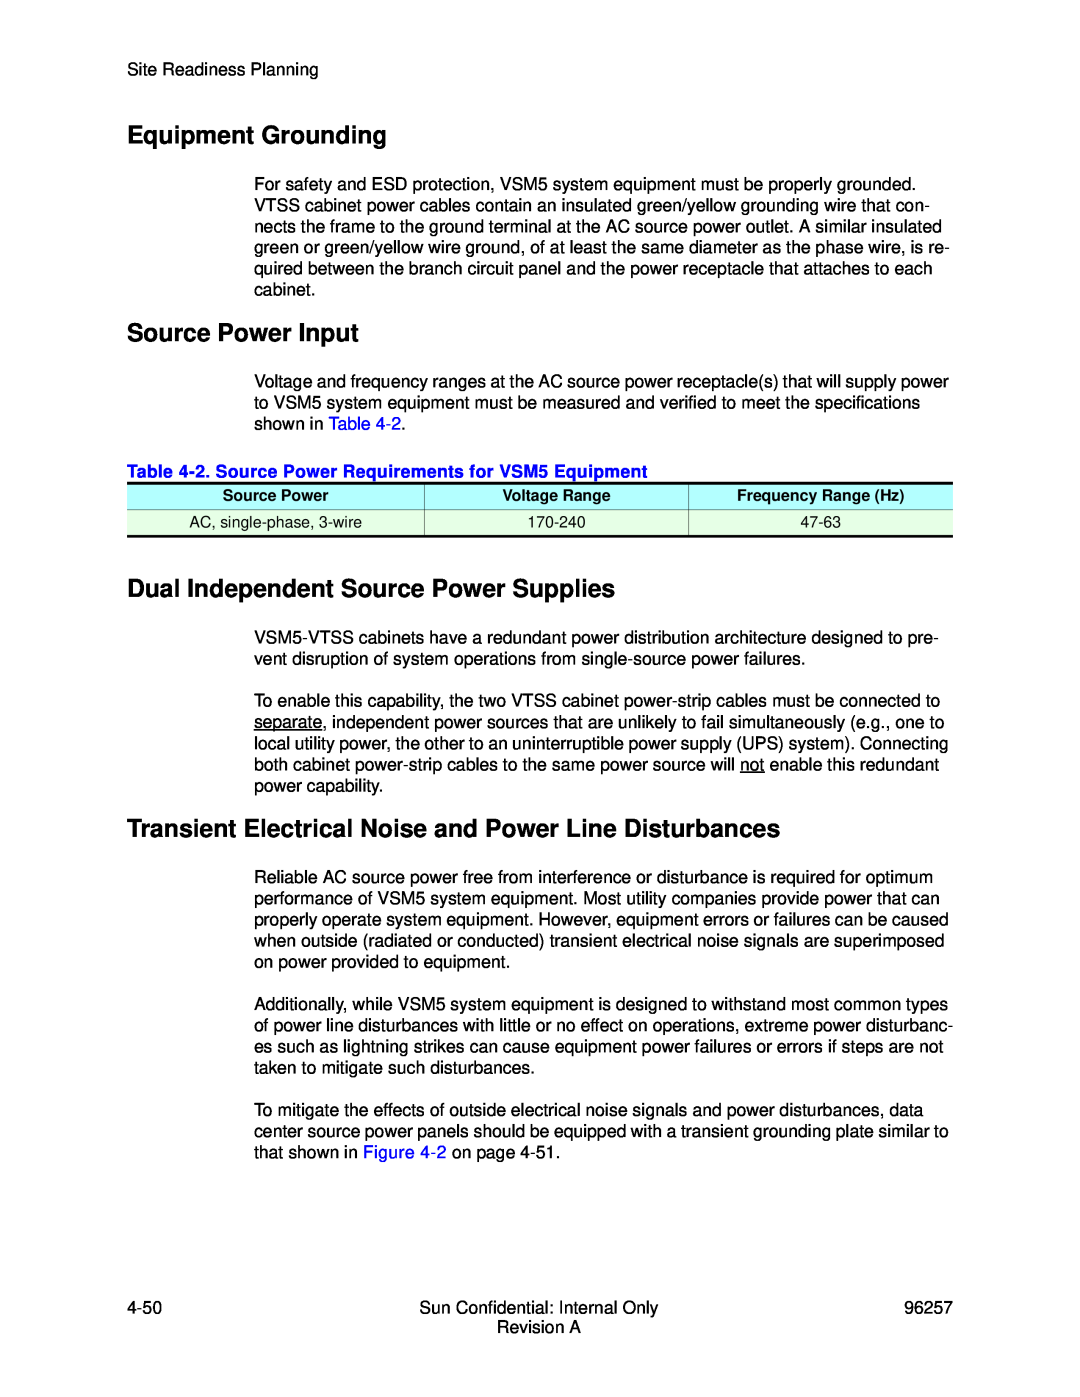 Sun Microsystems 96257 manual Equipment Grounding, Source Power Input, Dual Independent Source Power Supplies 